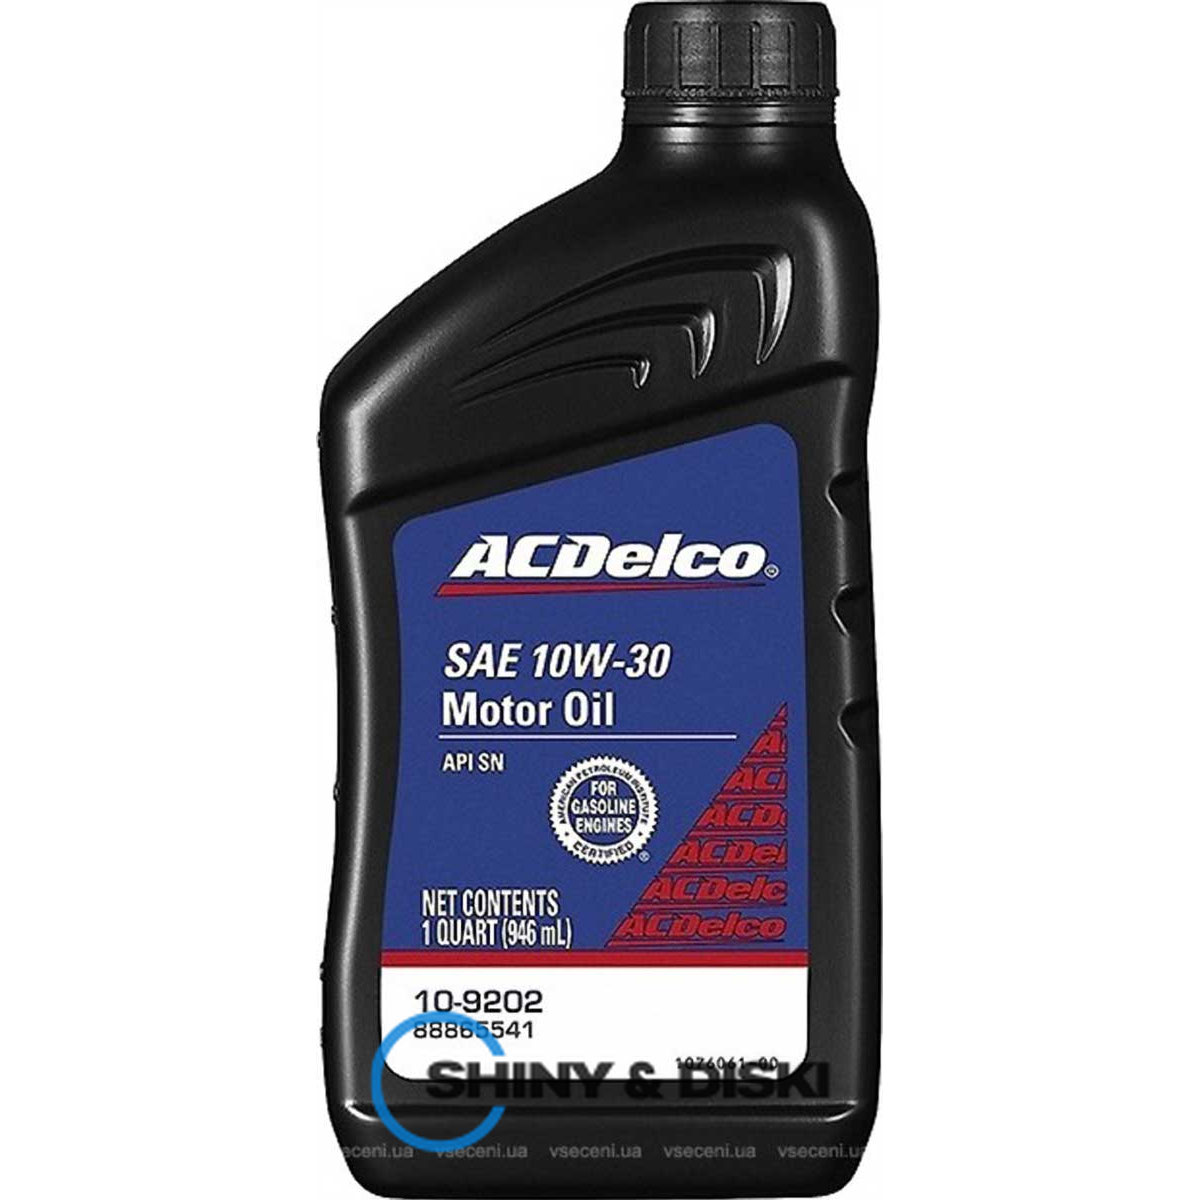 acdelco motor oil